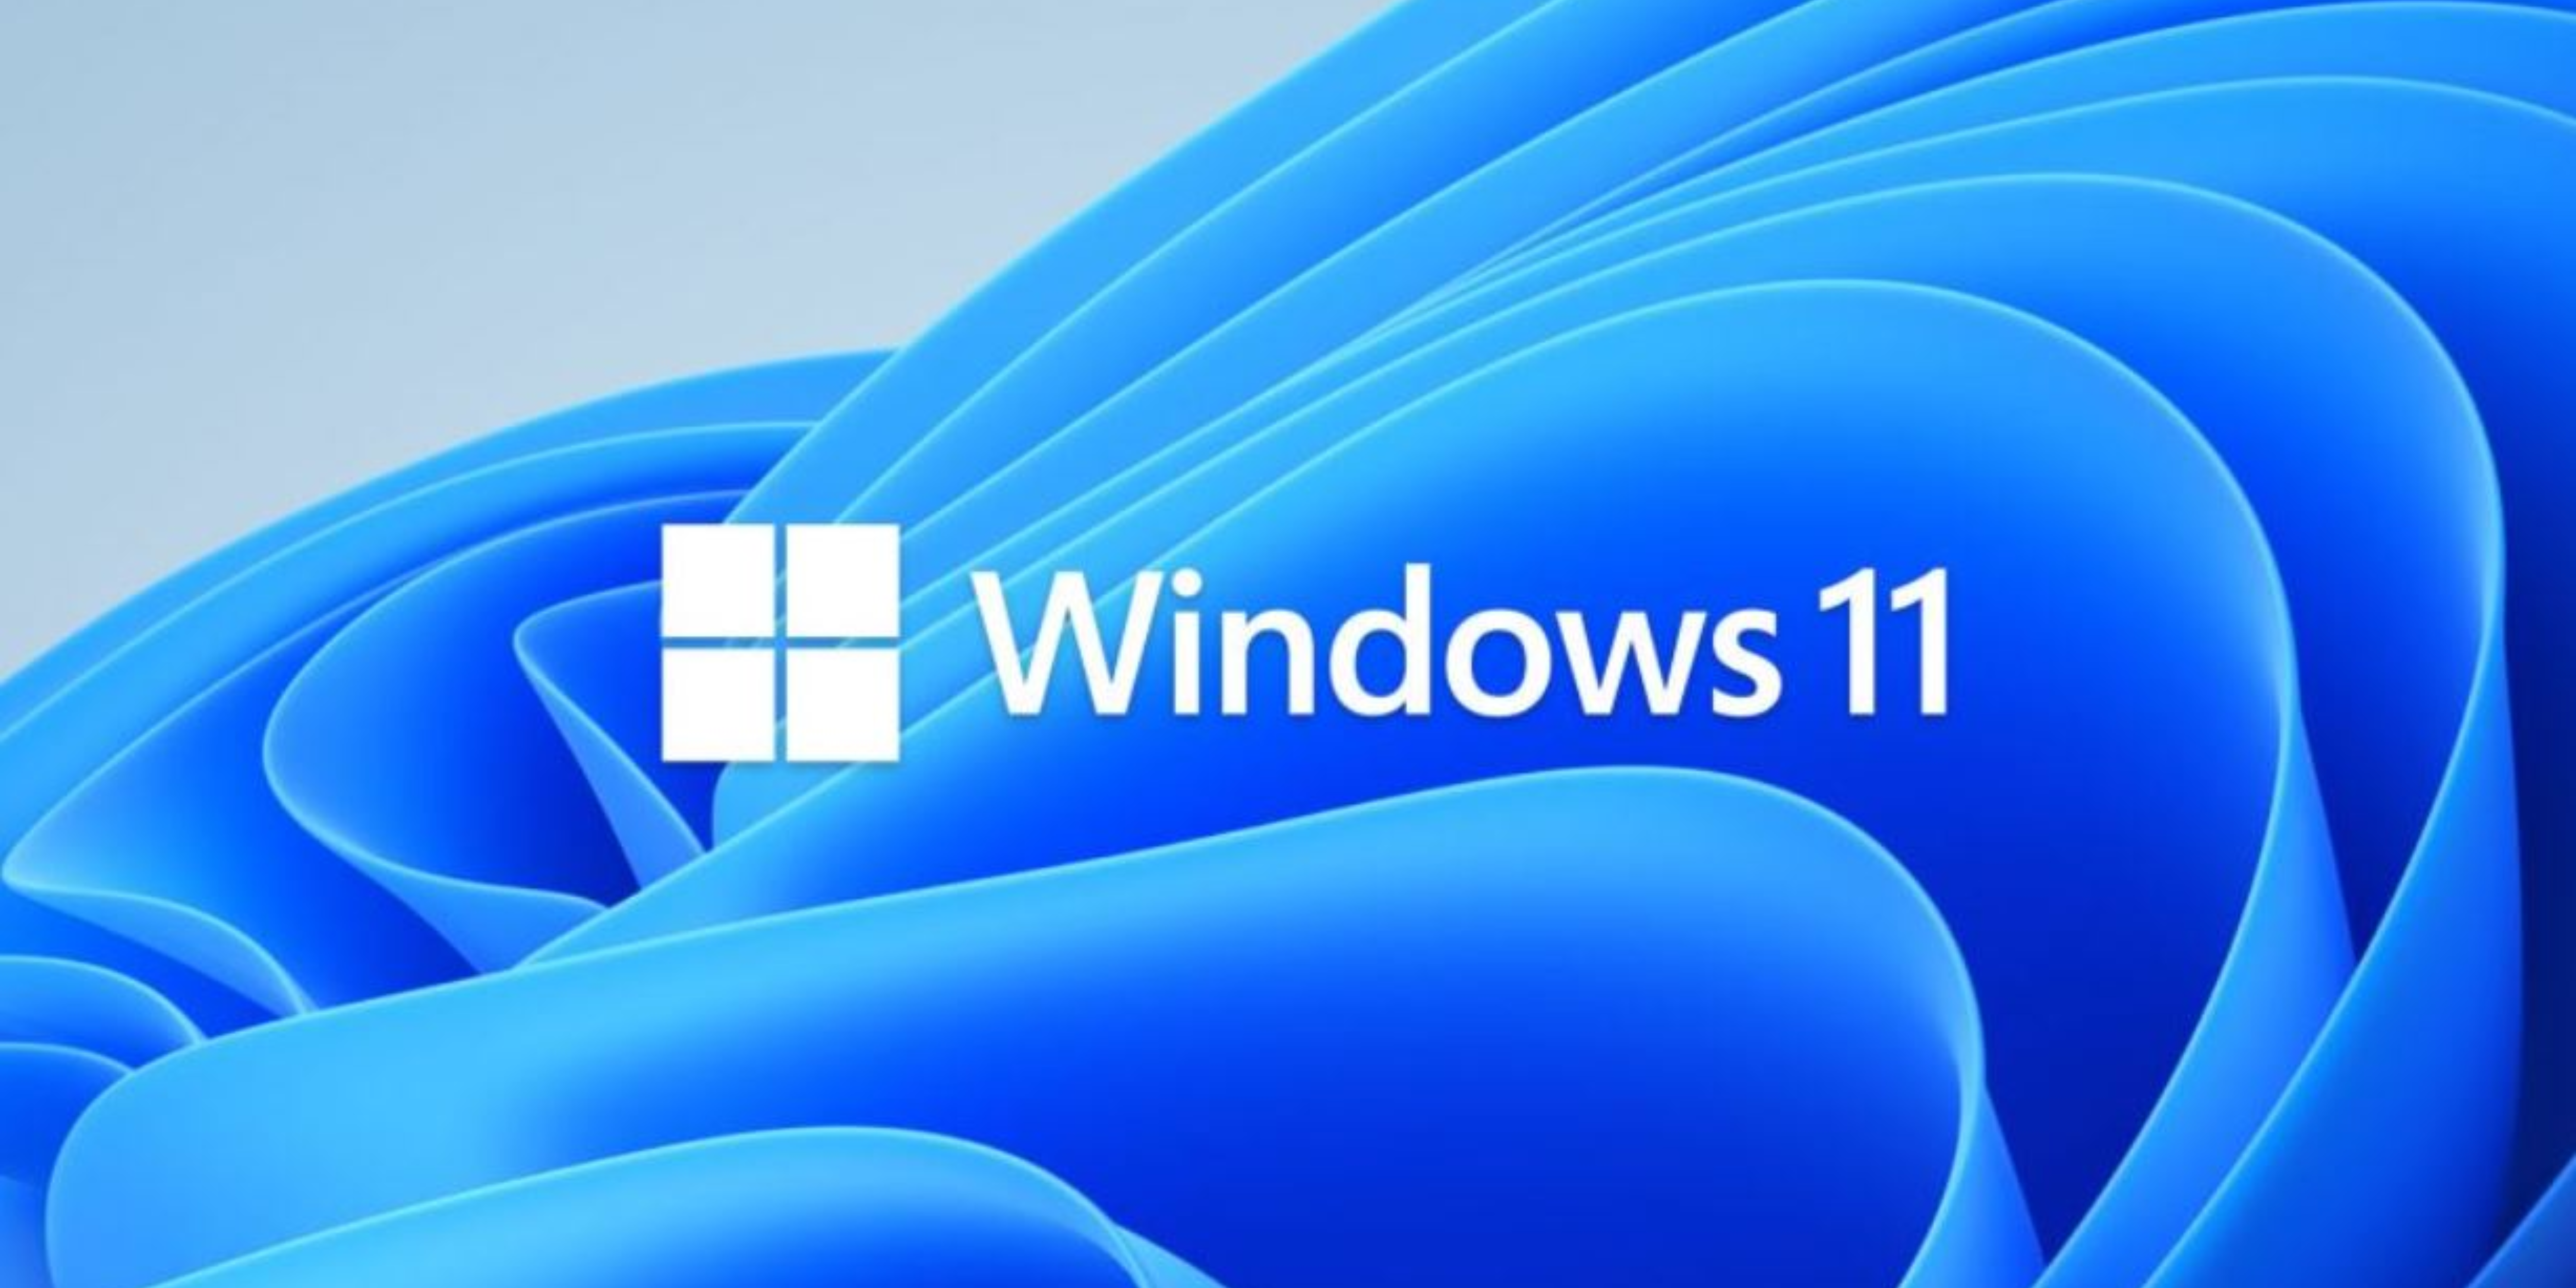 Deprecated Windows 11 features